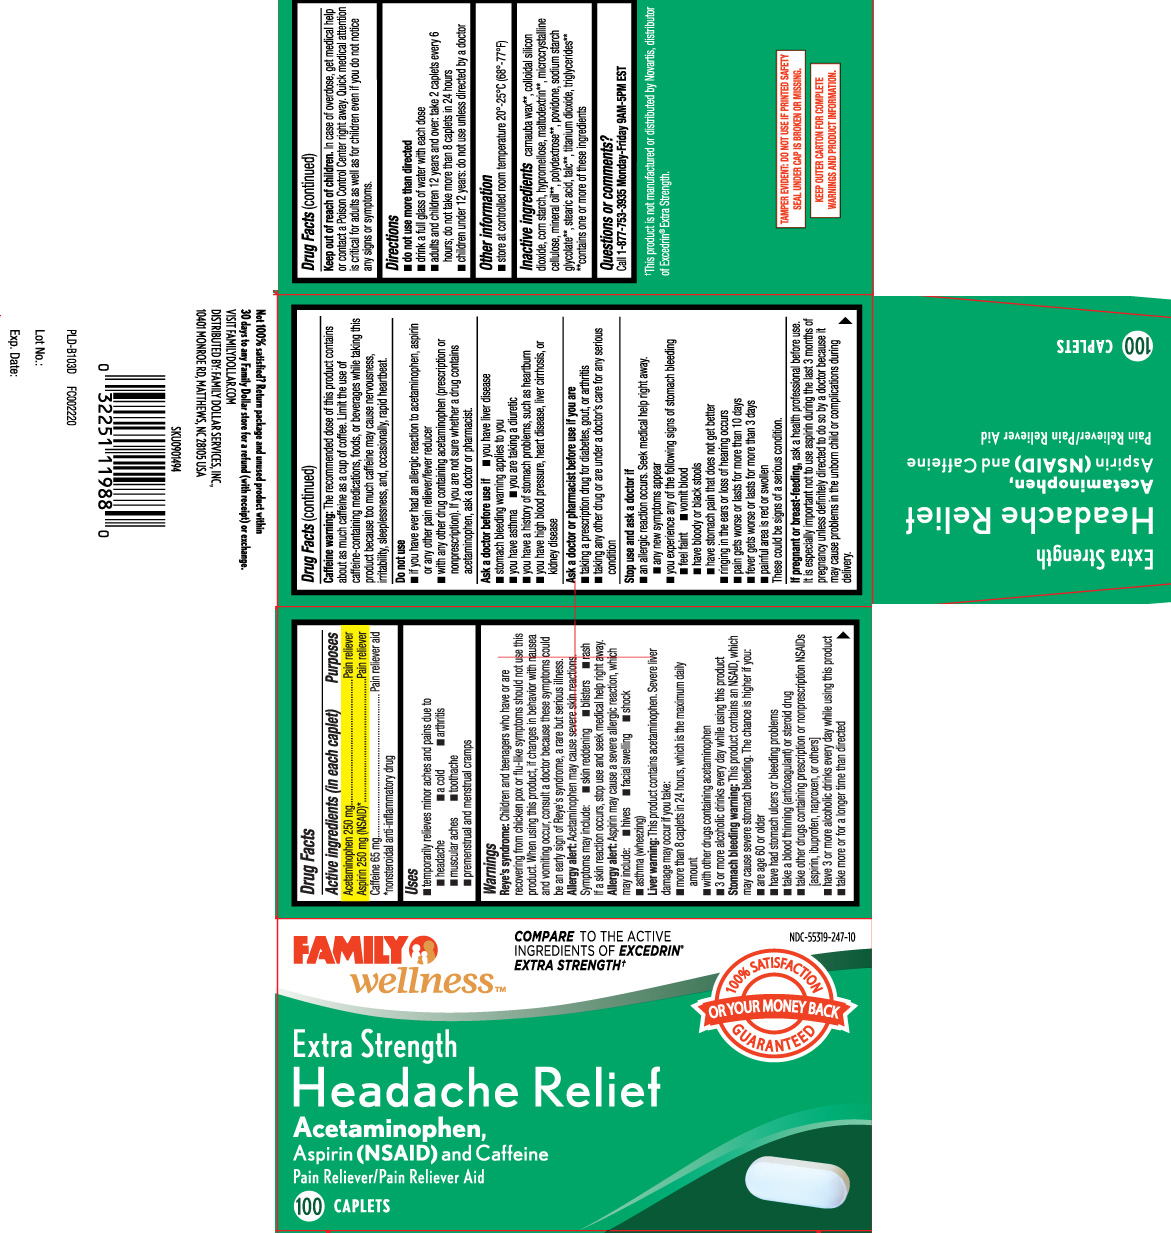 Acetaminophen 250 mg, Aspirin 250 mg, (NSAID)*, Caffeine 65 mg, *nonsteroidal anti-inflammatory drug